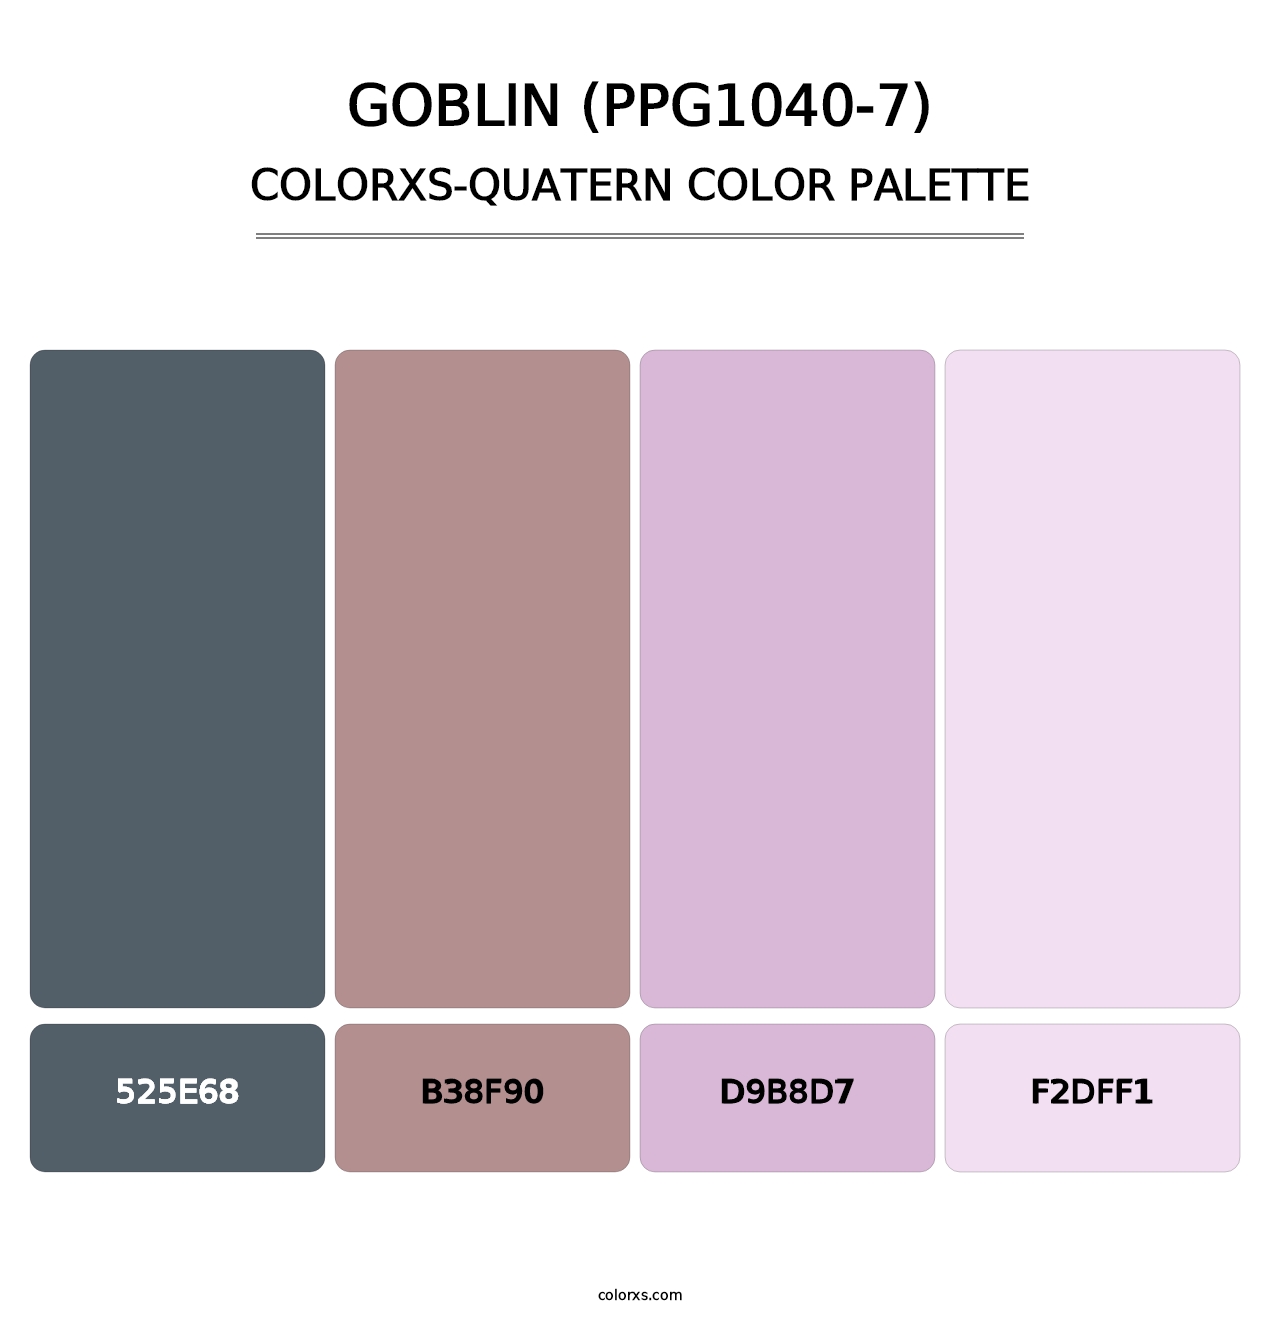 Goblin (PPG1040-7) - Colorxs Quatern Palette